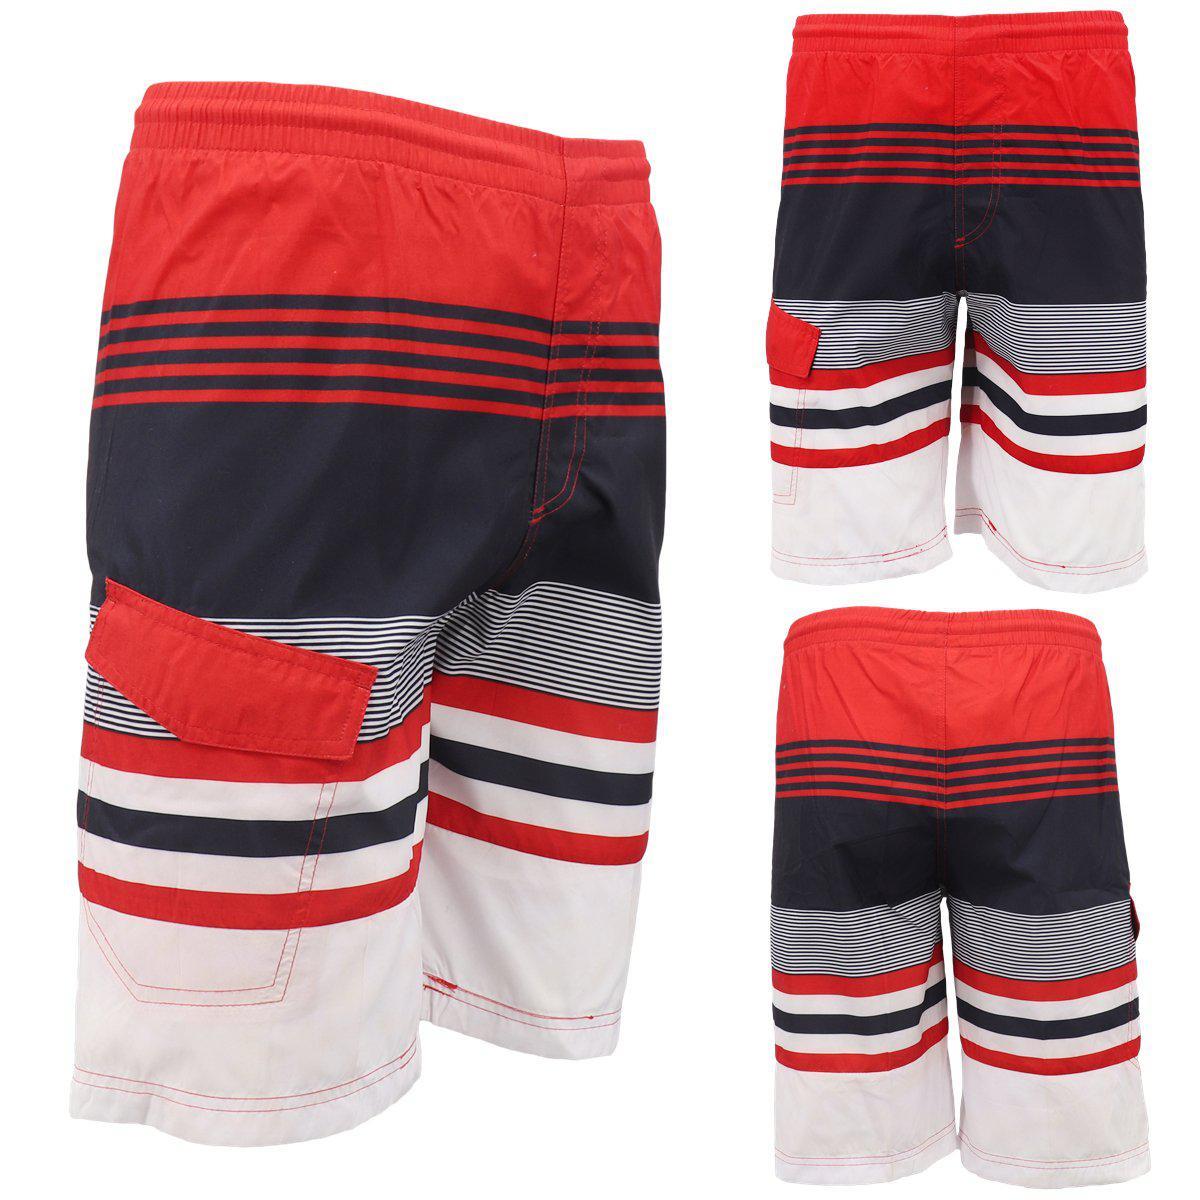 Men's Quick Dry Long Surf Board Swim Beach Swimming Shorts Trunks Pants Swimwear - Red (Size:XL)